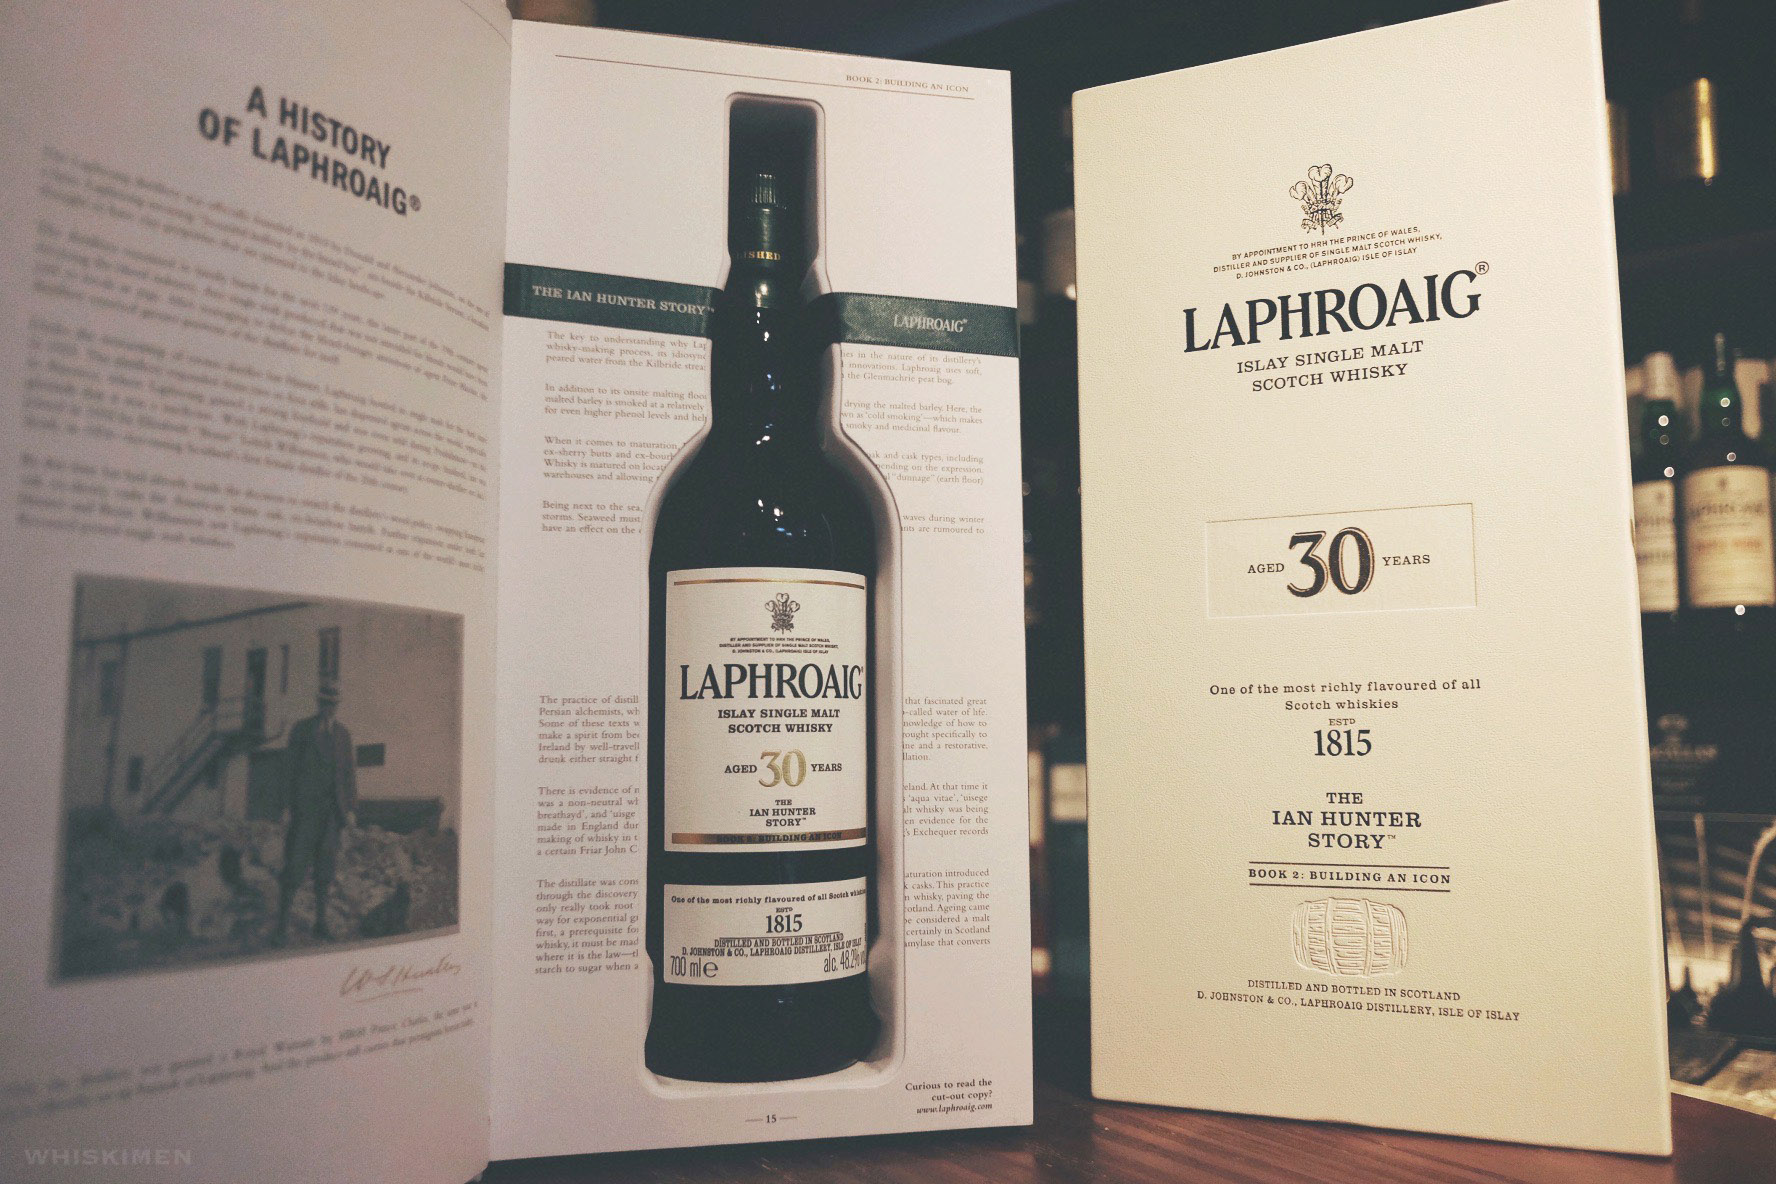 Laphroaig 30 Year Old Single Malt Scotch Whisky (The Ian Hunter Story Book 2)